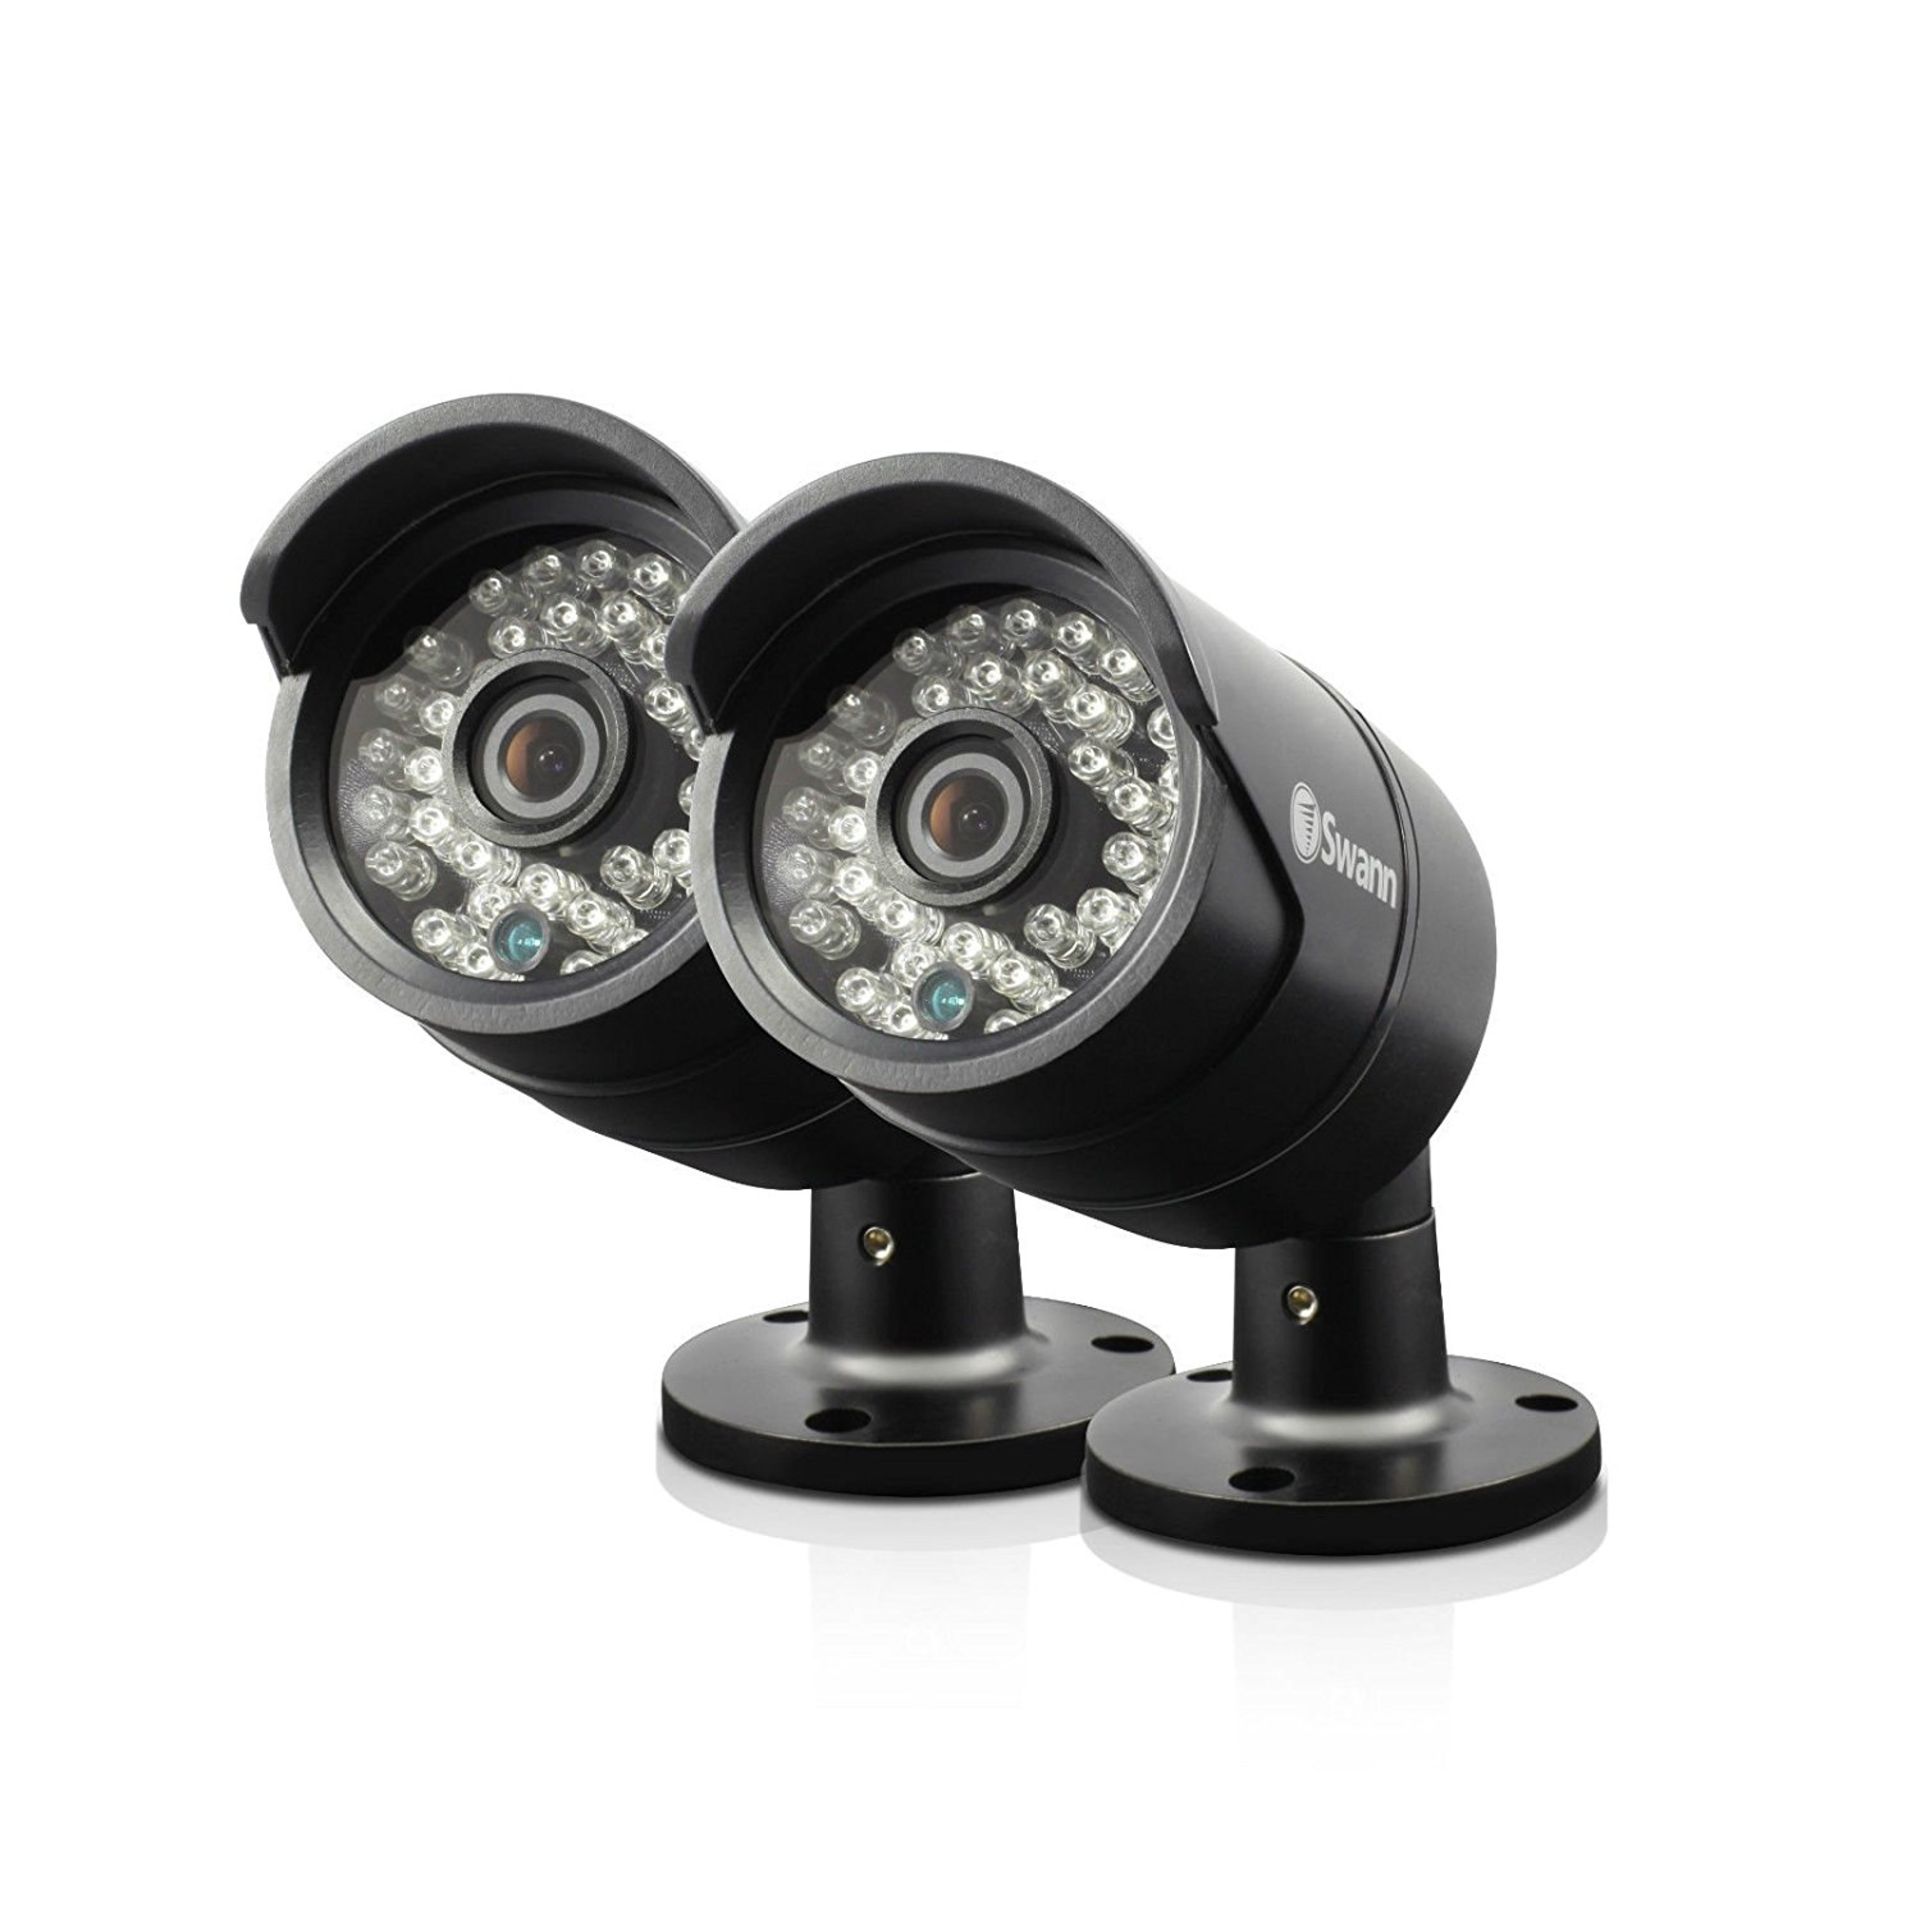 V Grade A Swann Pro A850 PK2 Twin Pack Multi-Purpose Day/Night Security Camera - Black